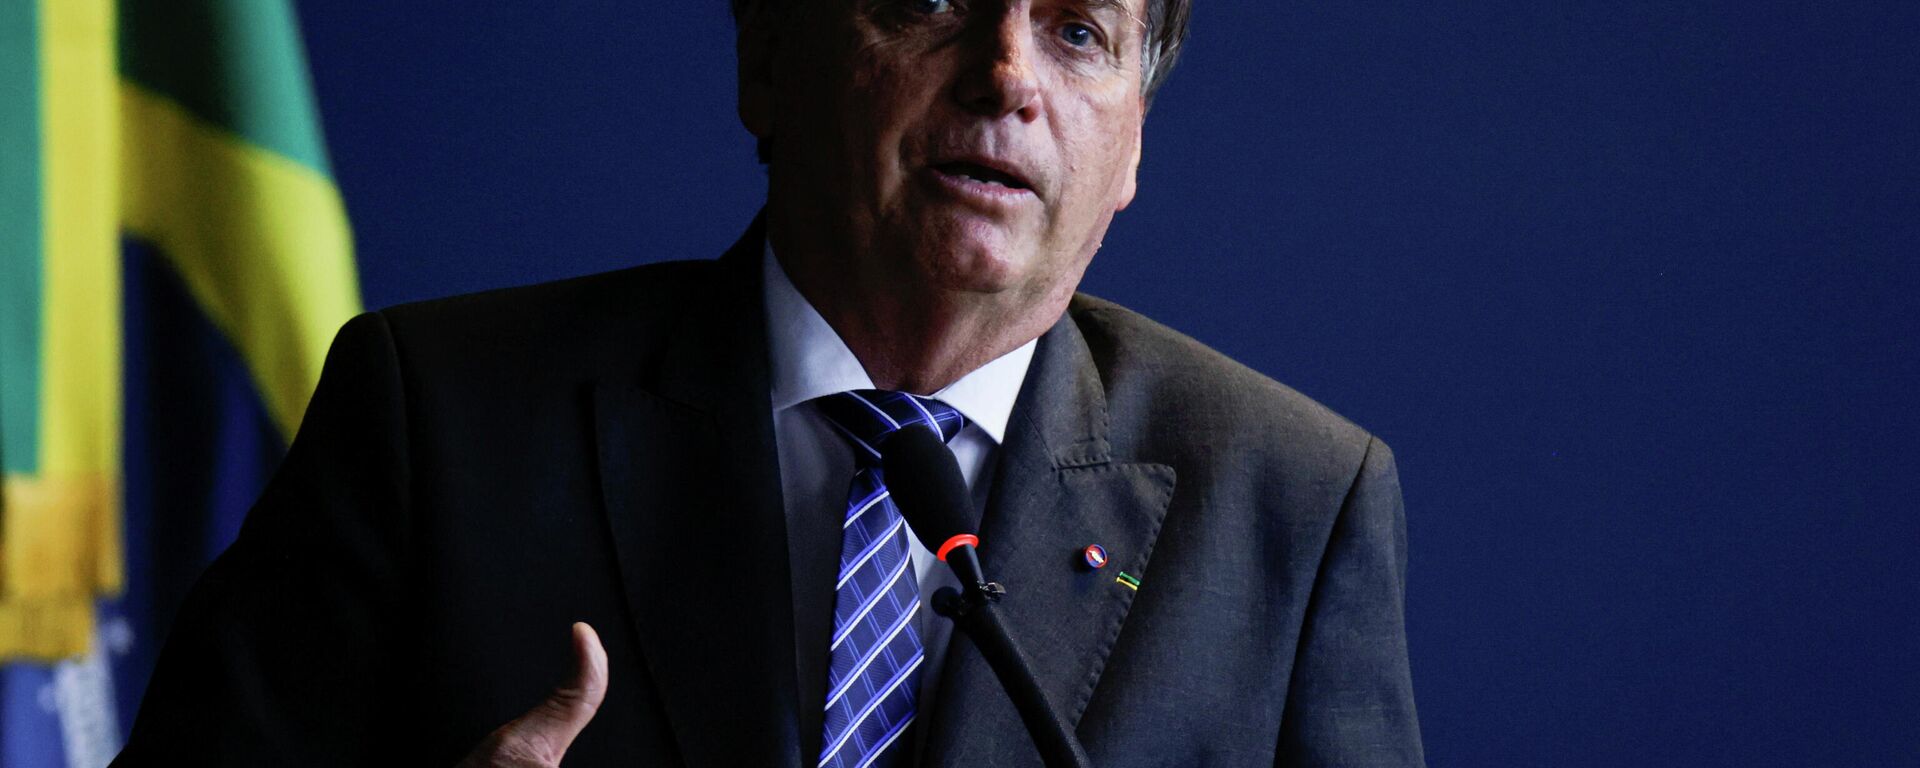 Jair Bolsonaro, presidente de Brasil - Sputnik Mundo, 1920, 26.11.2021